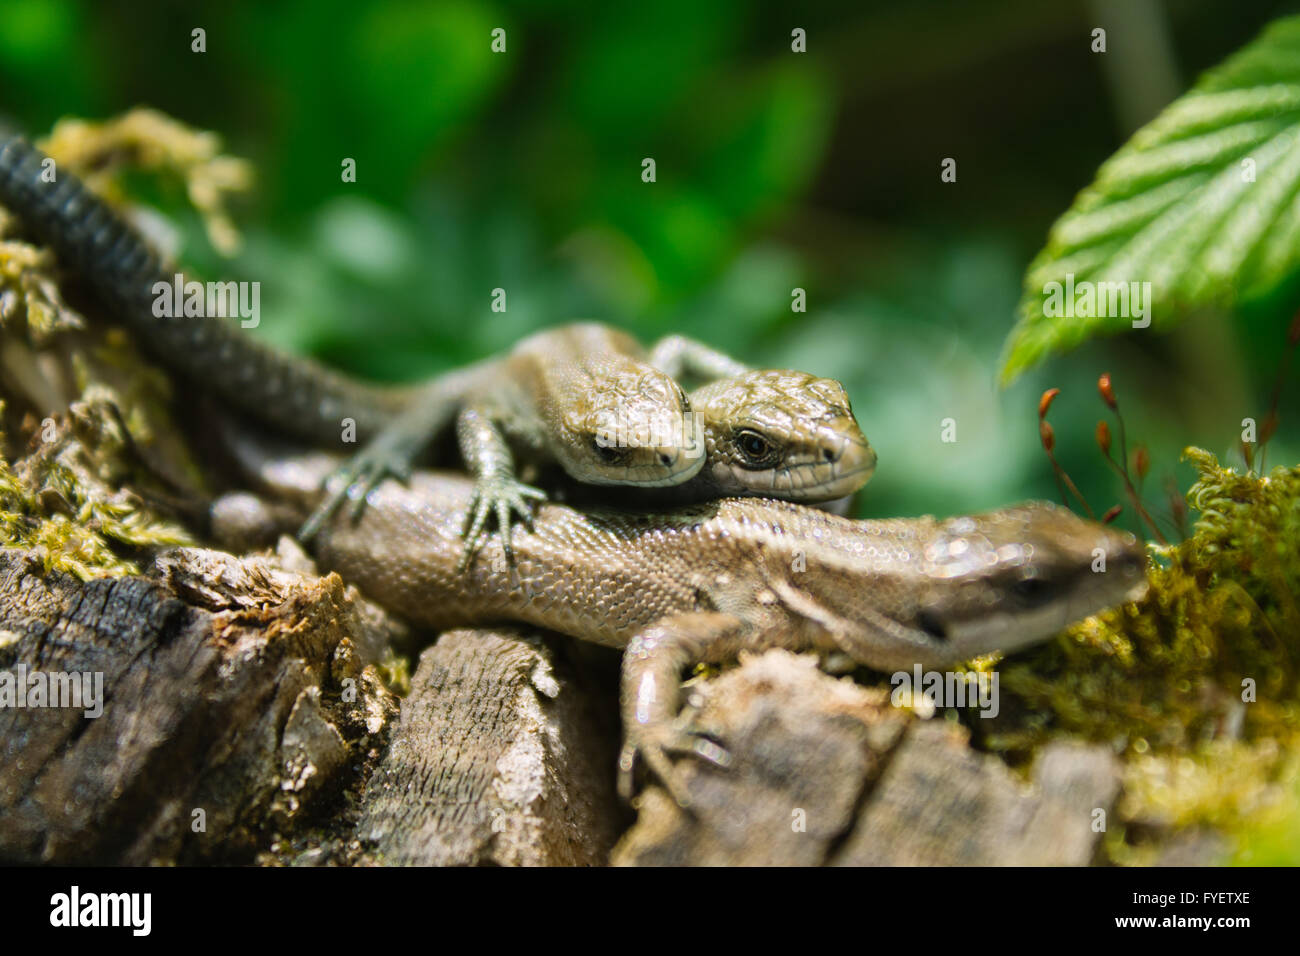 Three small lizards in nature. Stock Photo